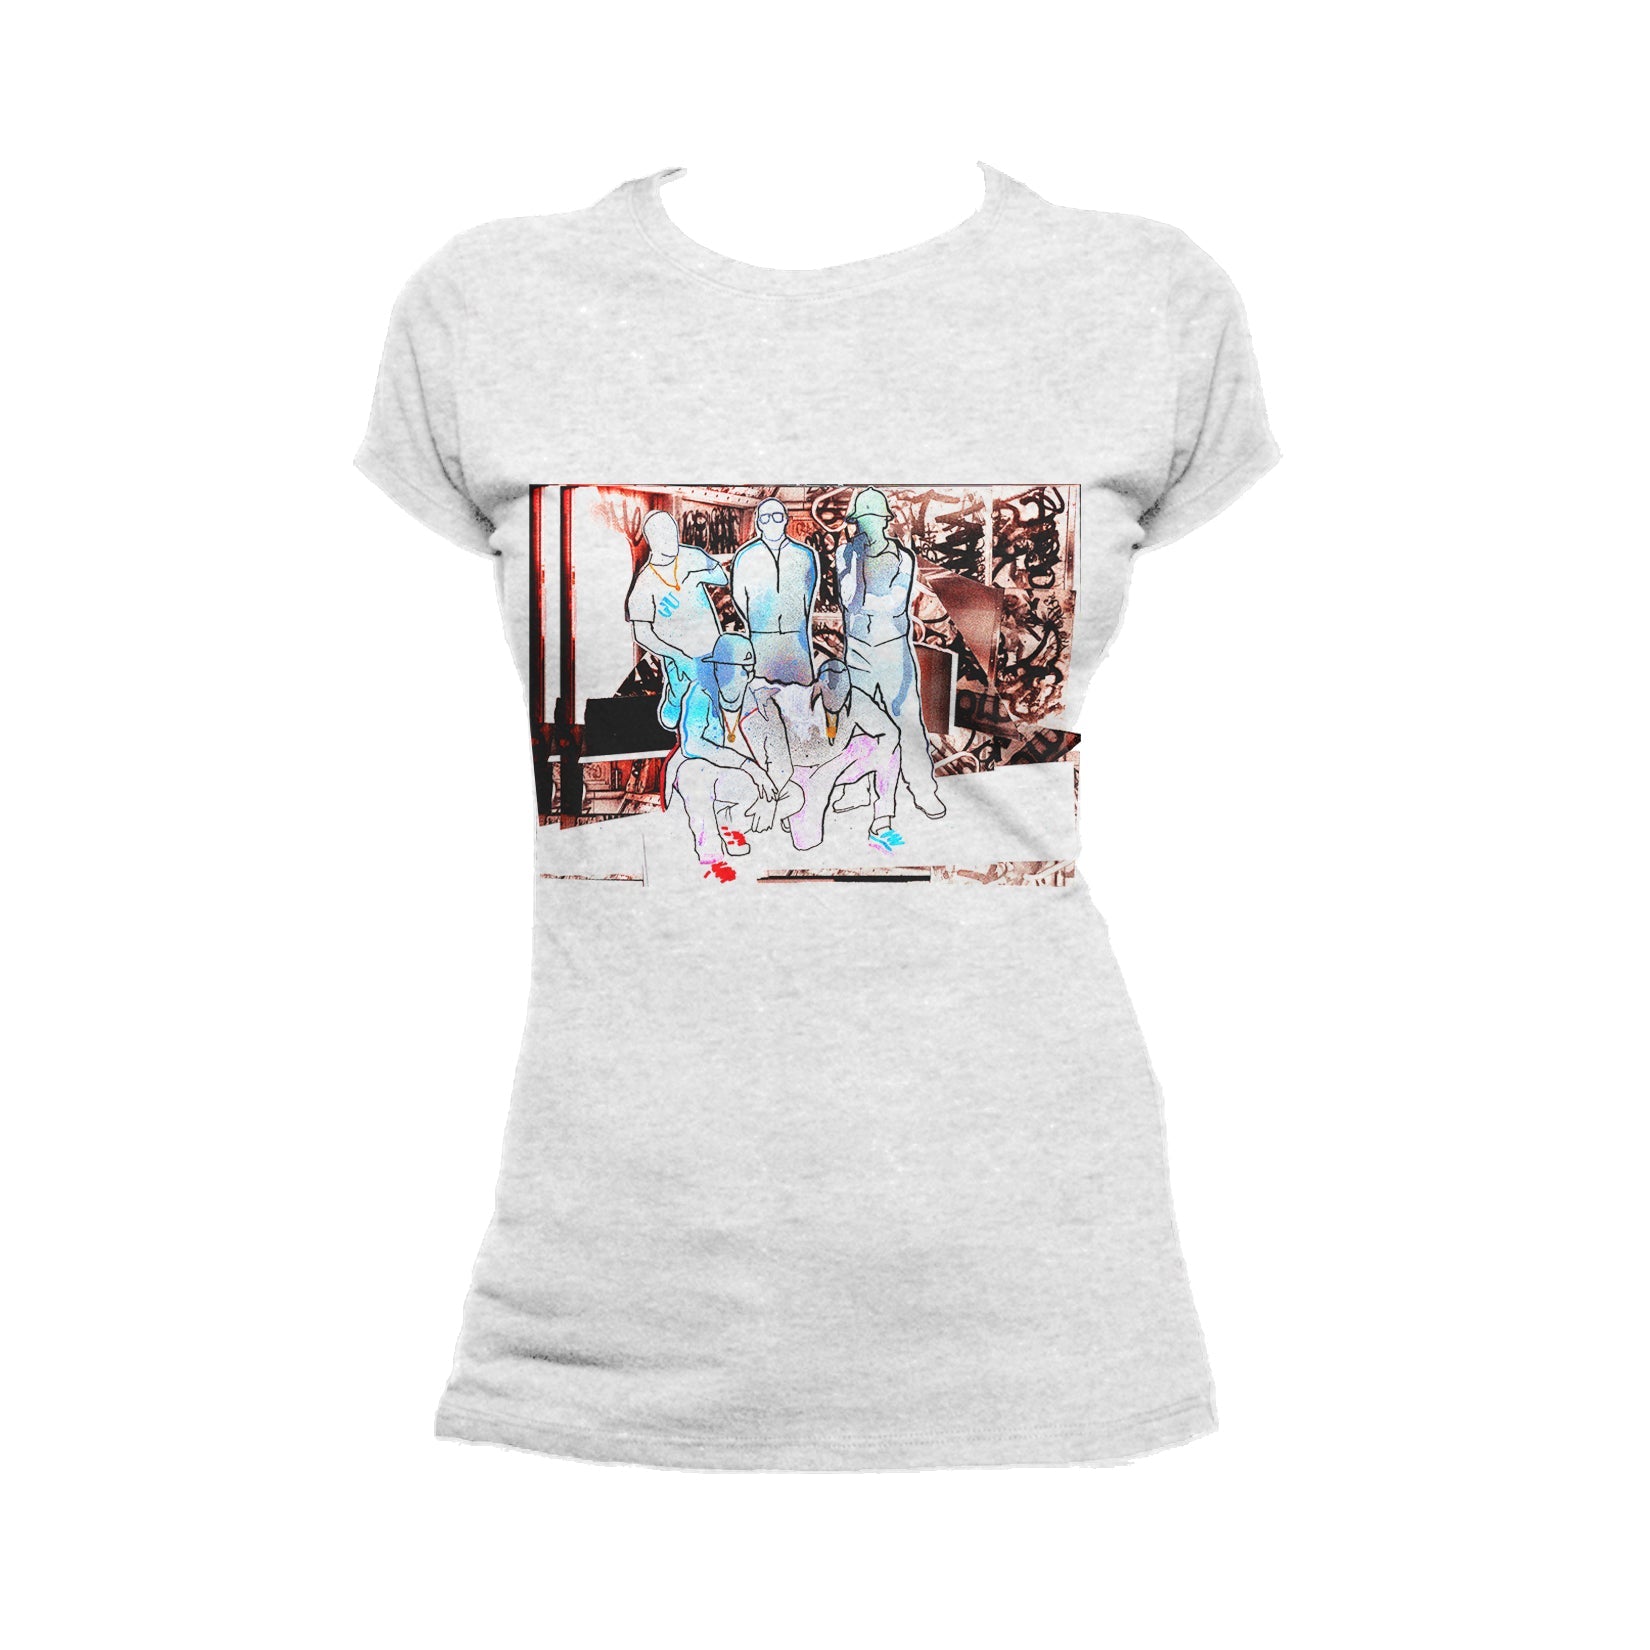 US Brand X Old's Kool Posse Official Women's T-Shirt ()